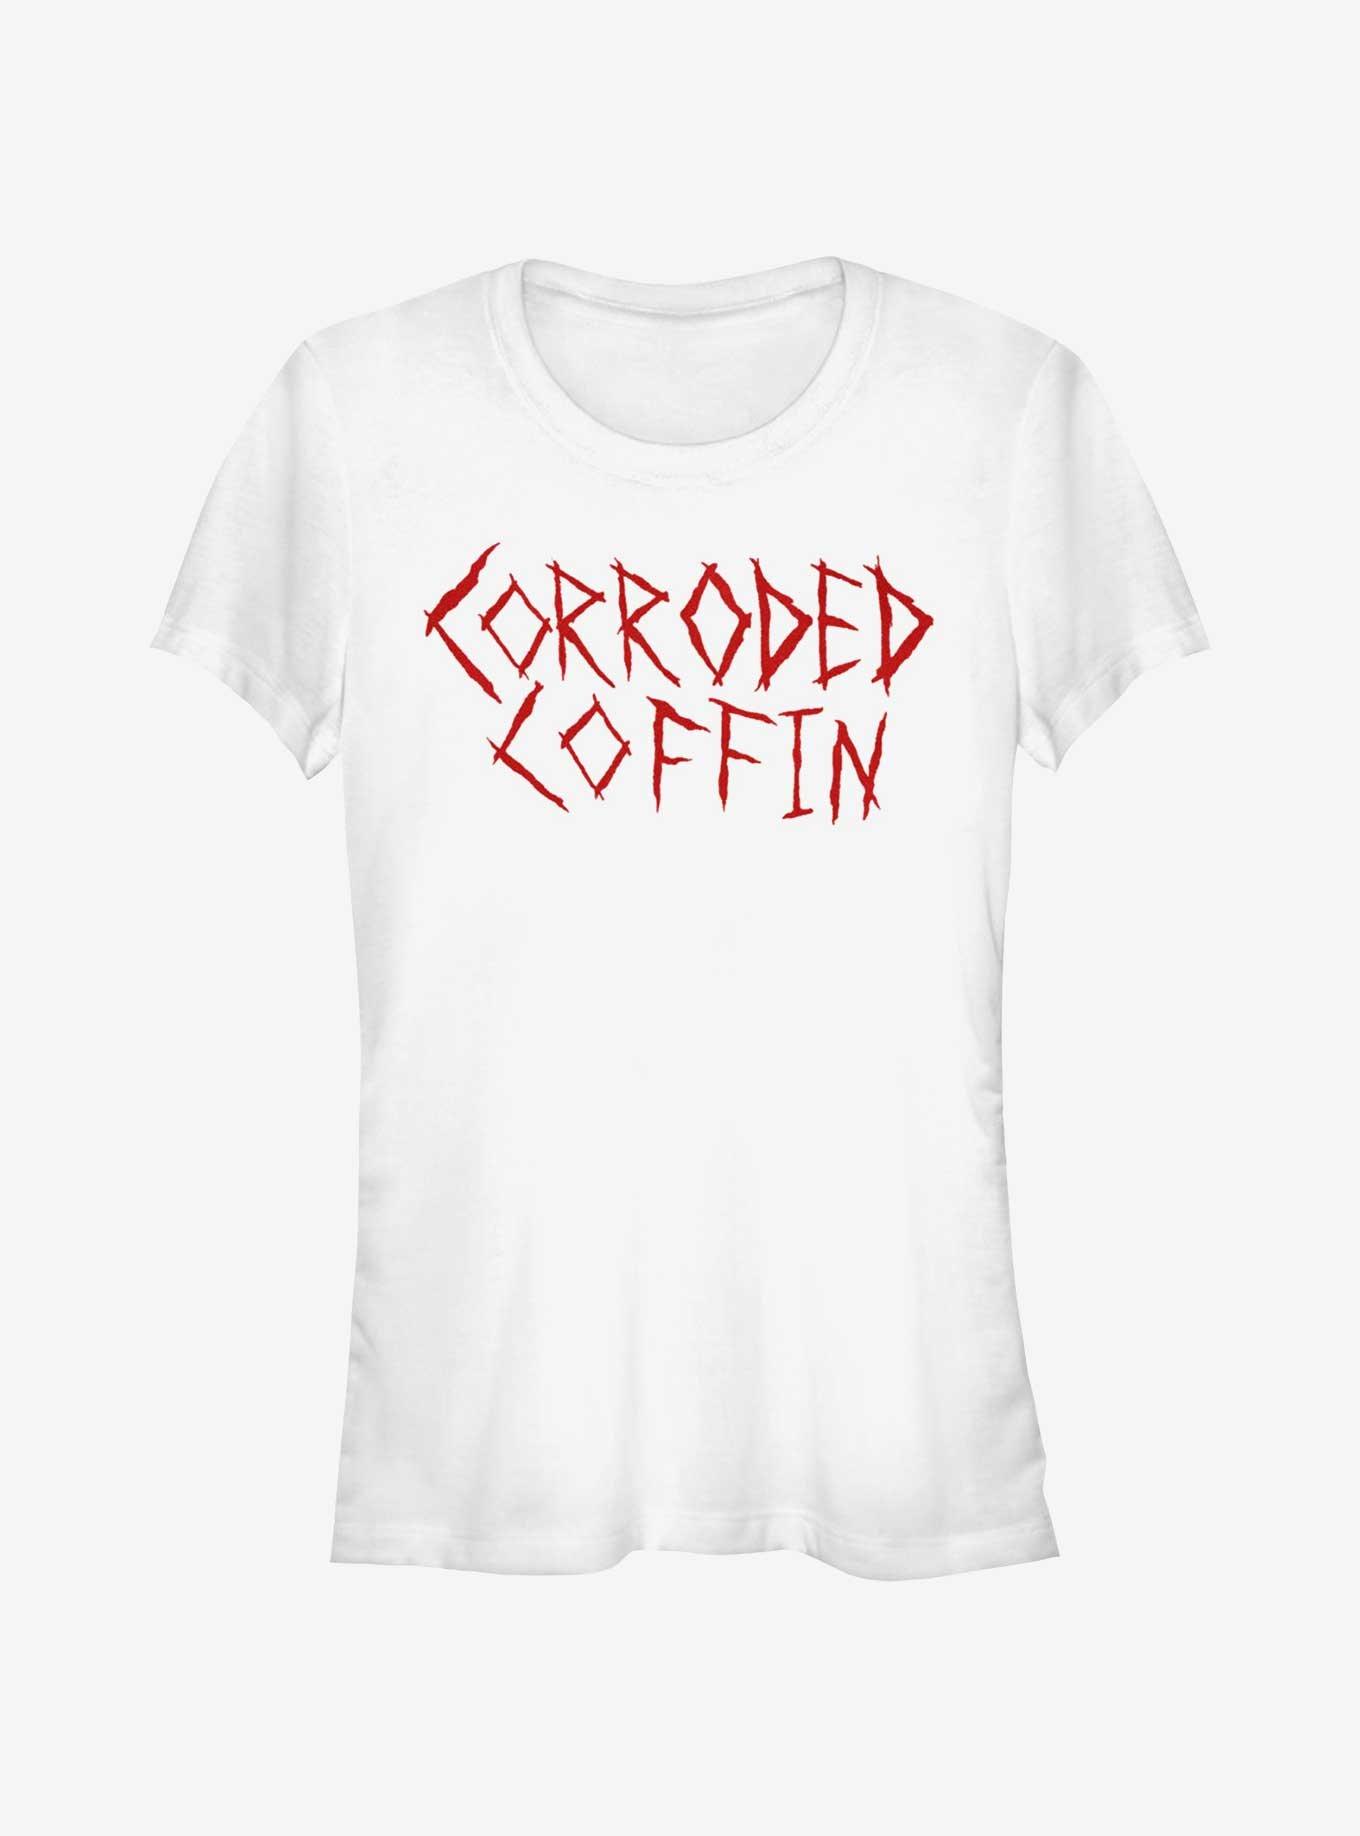 Stranger Things Corroded Coffin Girls T-Shirt, WHITE, hi-res